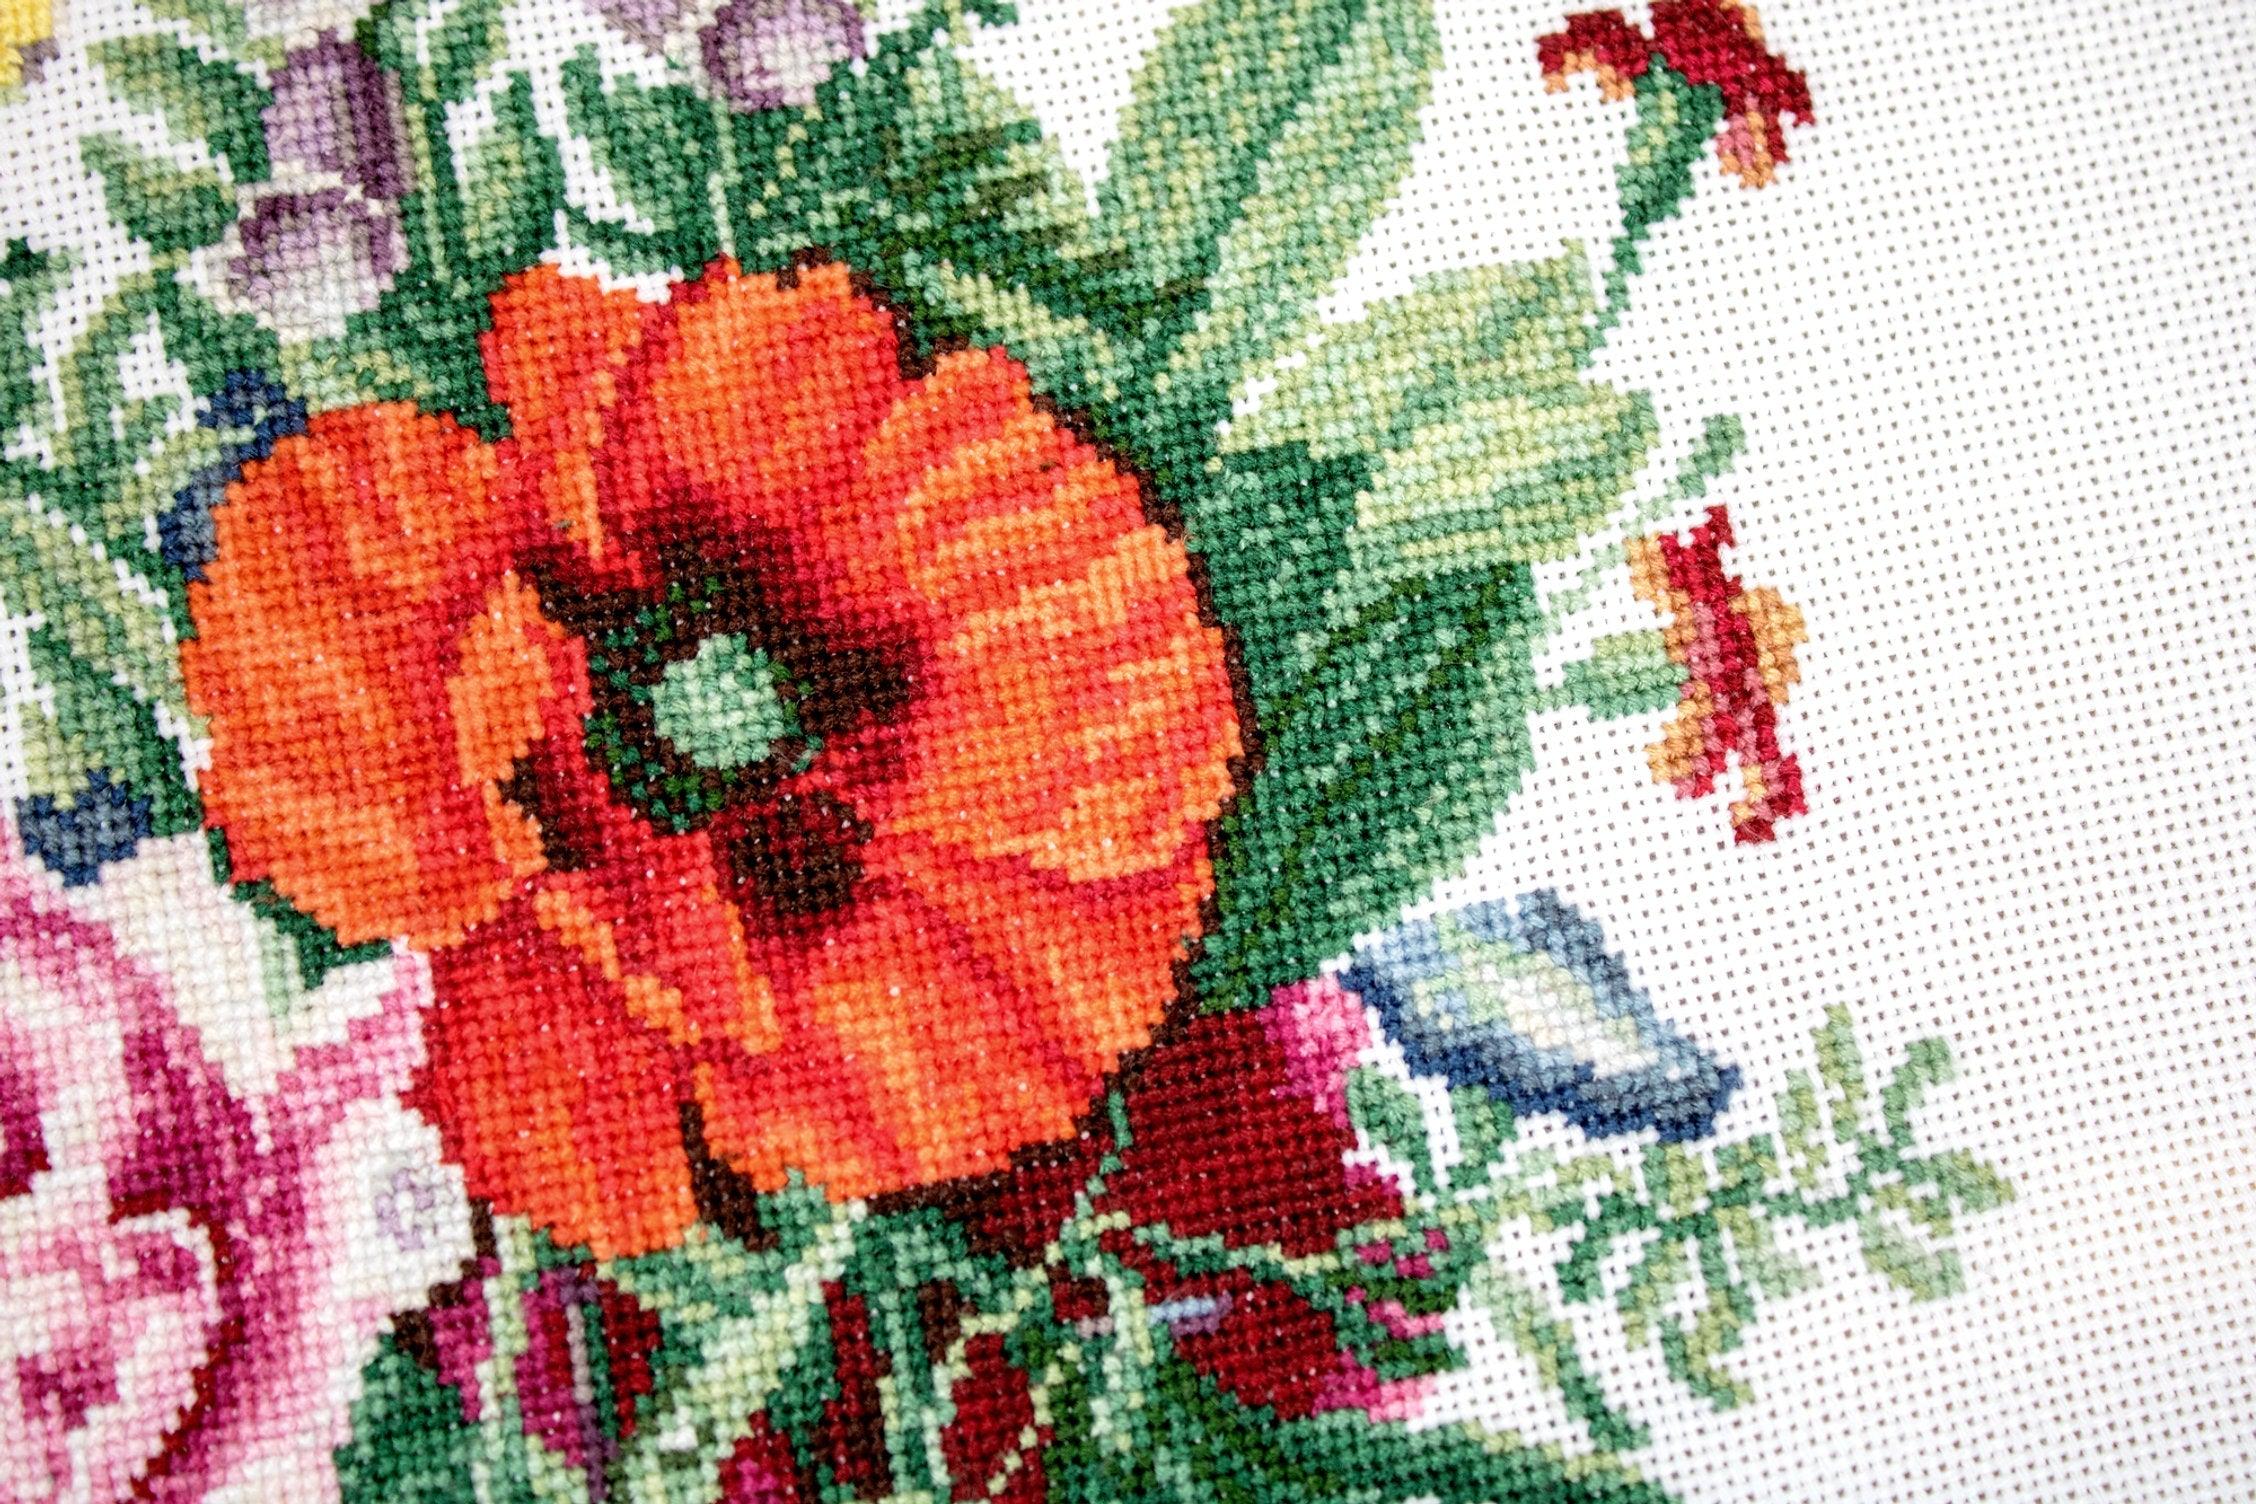 Cross Stitch Kit Luca-S - Bouquet with Poppy and Peony, B2350 - Luca-S